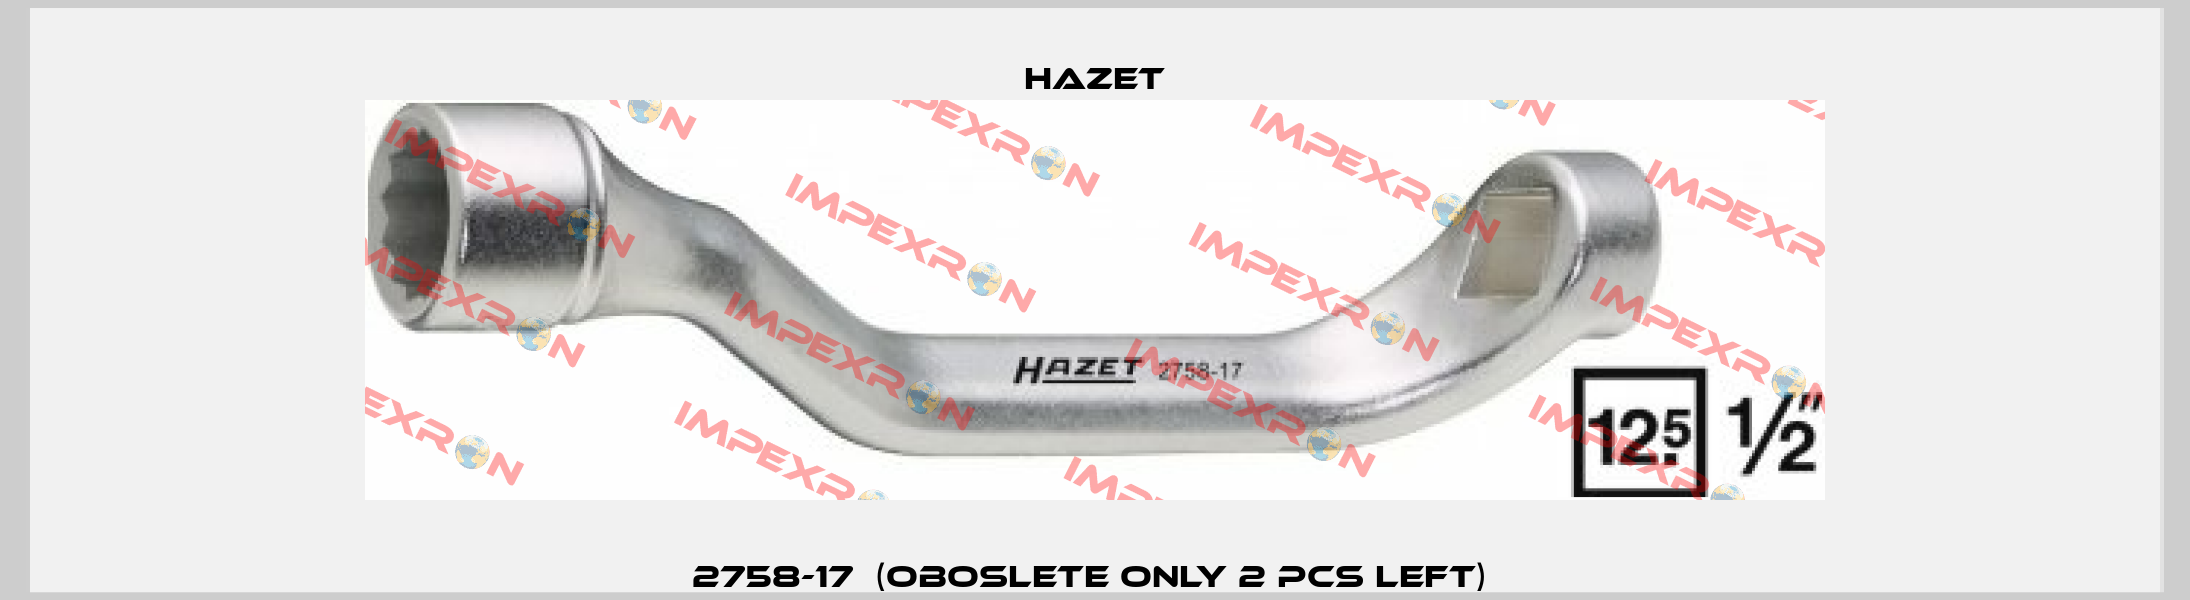 2758-17  (oboslete only 2 pcs left)  Hazet